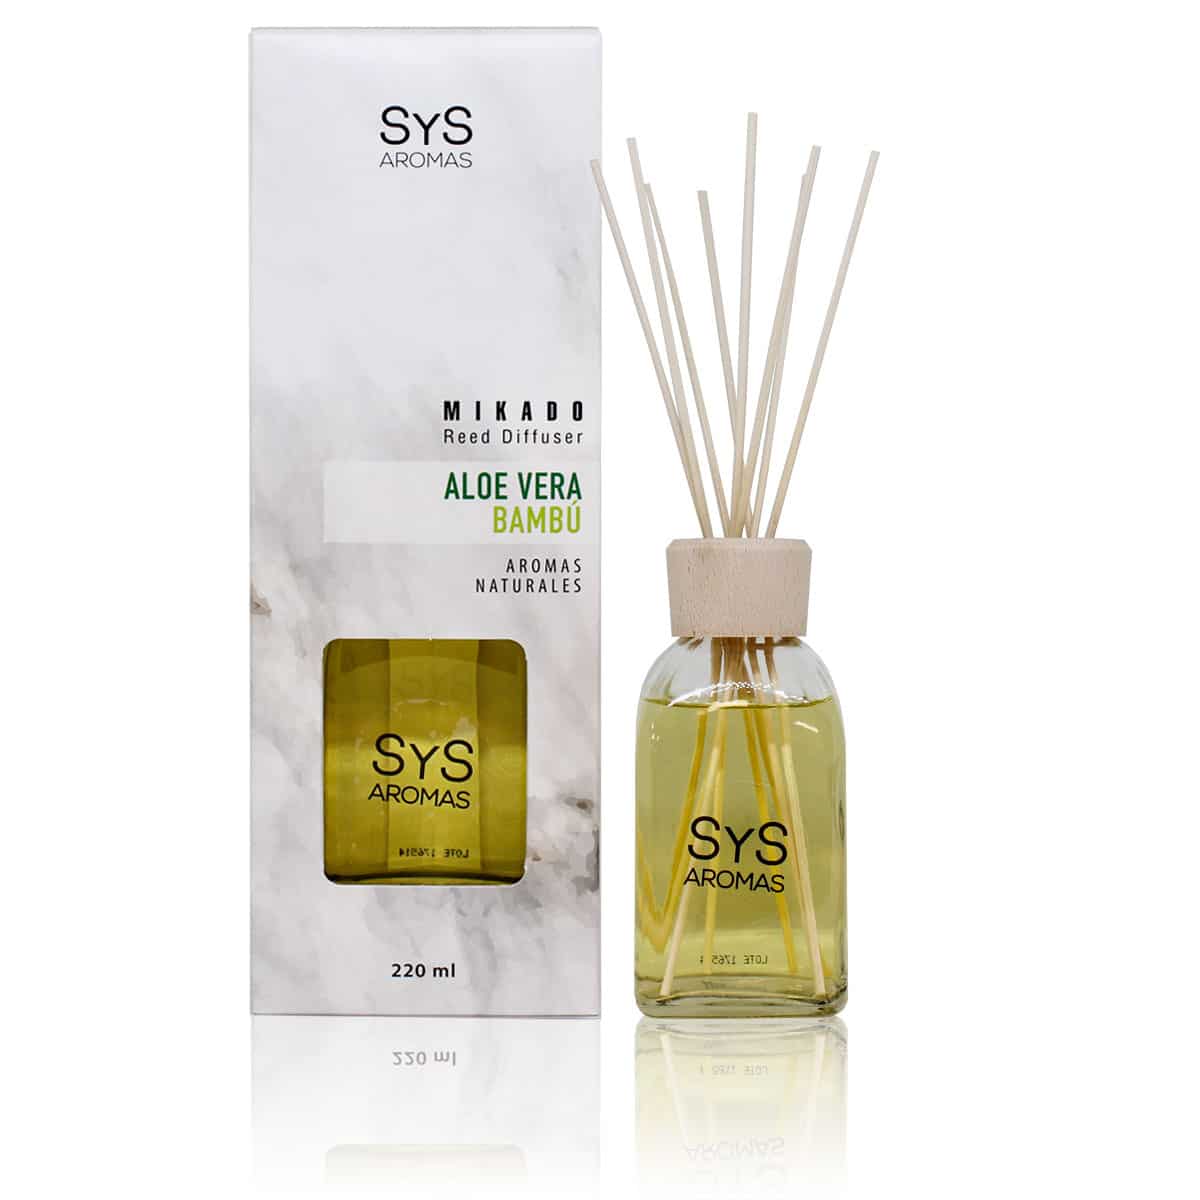 Buy Aloe vera Bamboo Mikado Air freshener 220ml Marmol Collection SYS Aromas